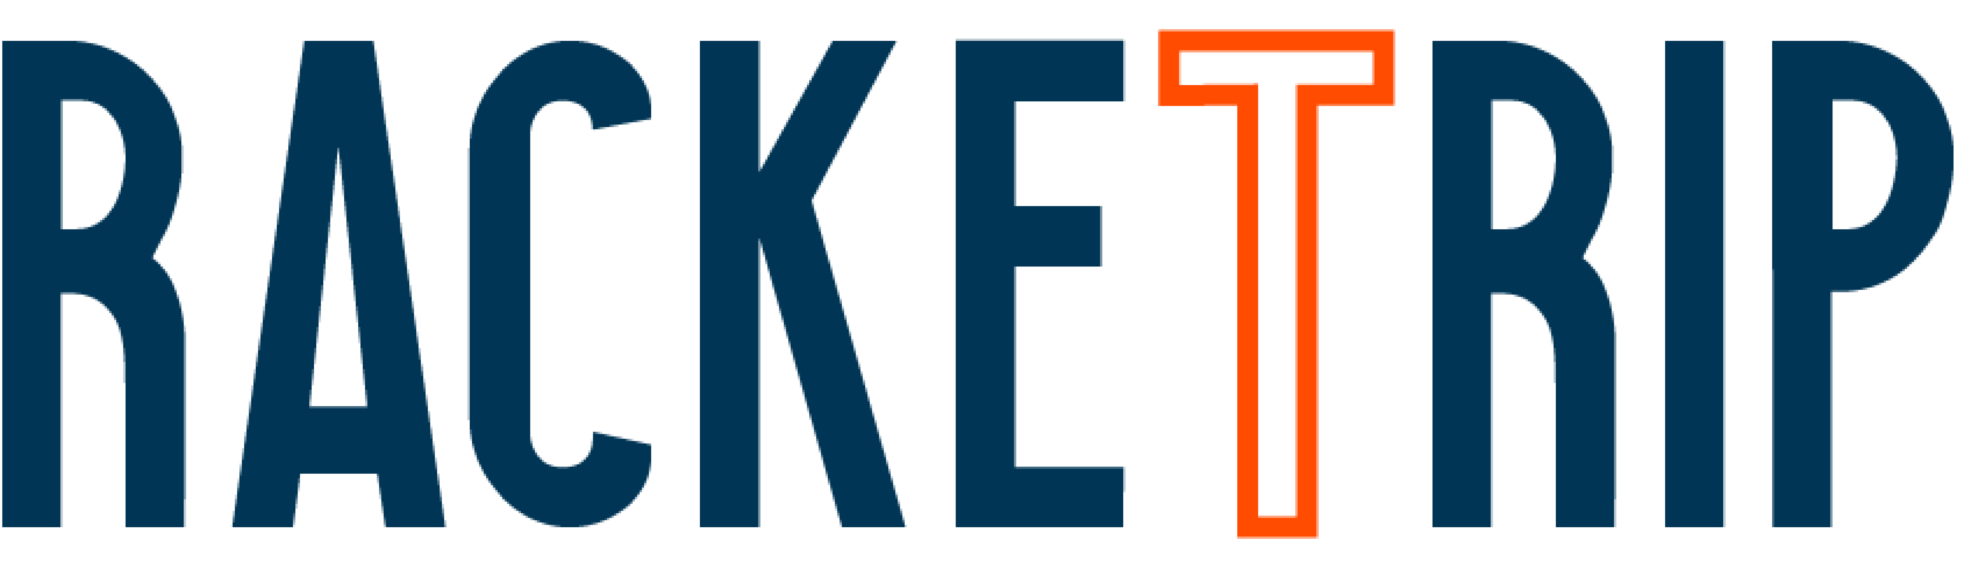 logotip-racketrip-blau